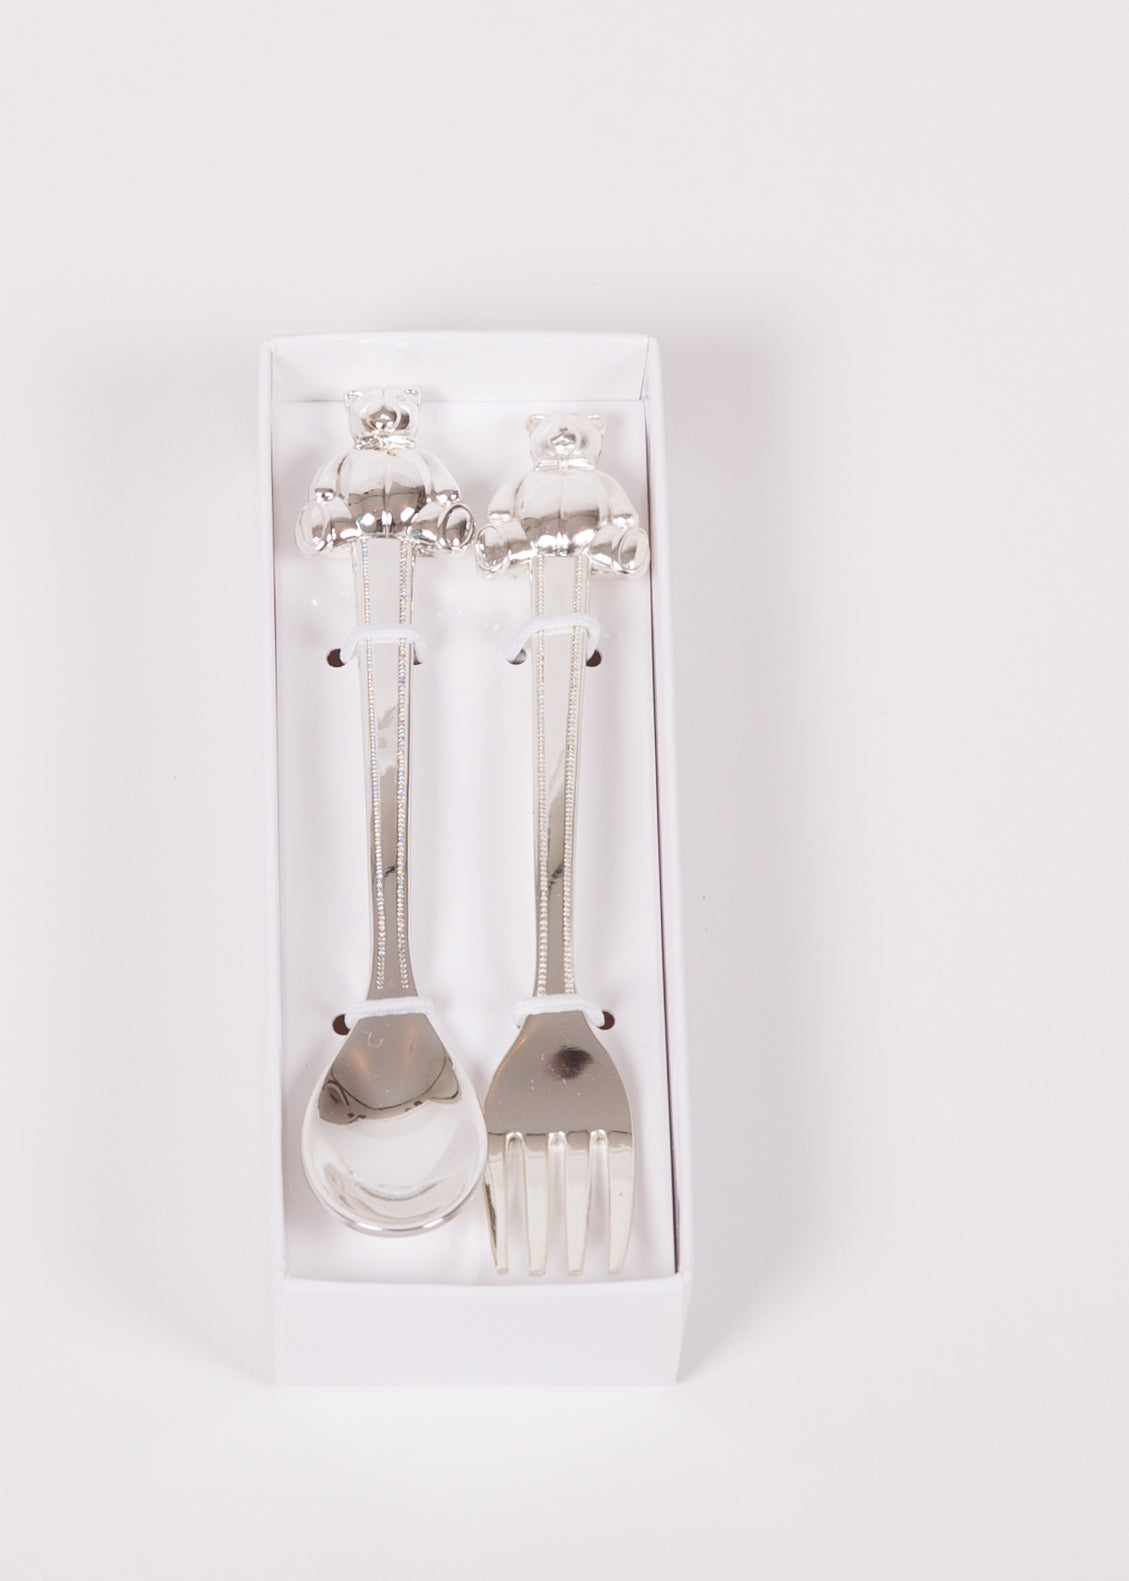 Silver Plated Teddy Bear Cutlery Set - Keepsake Gift